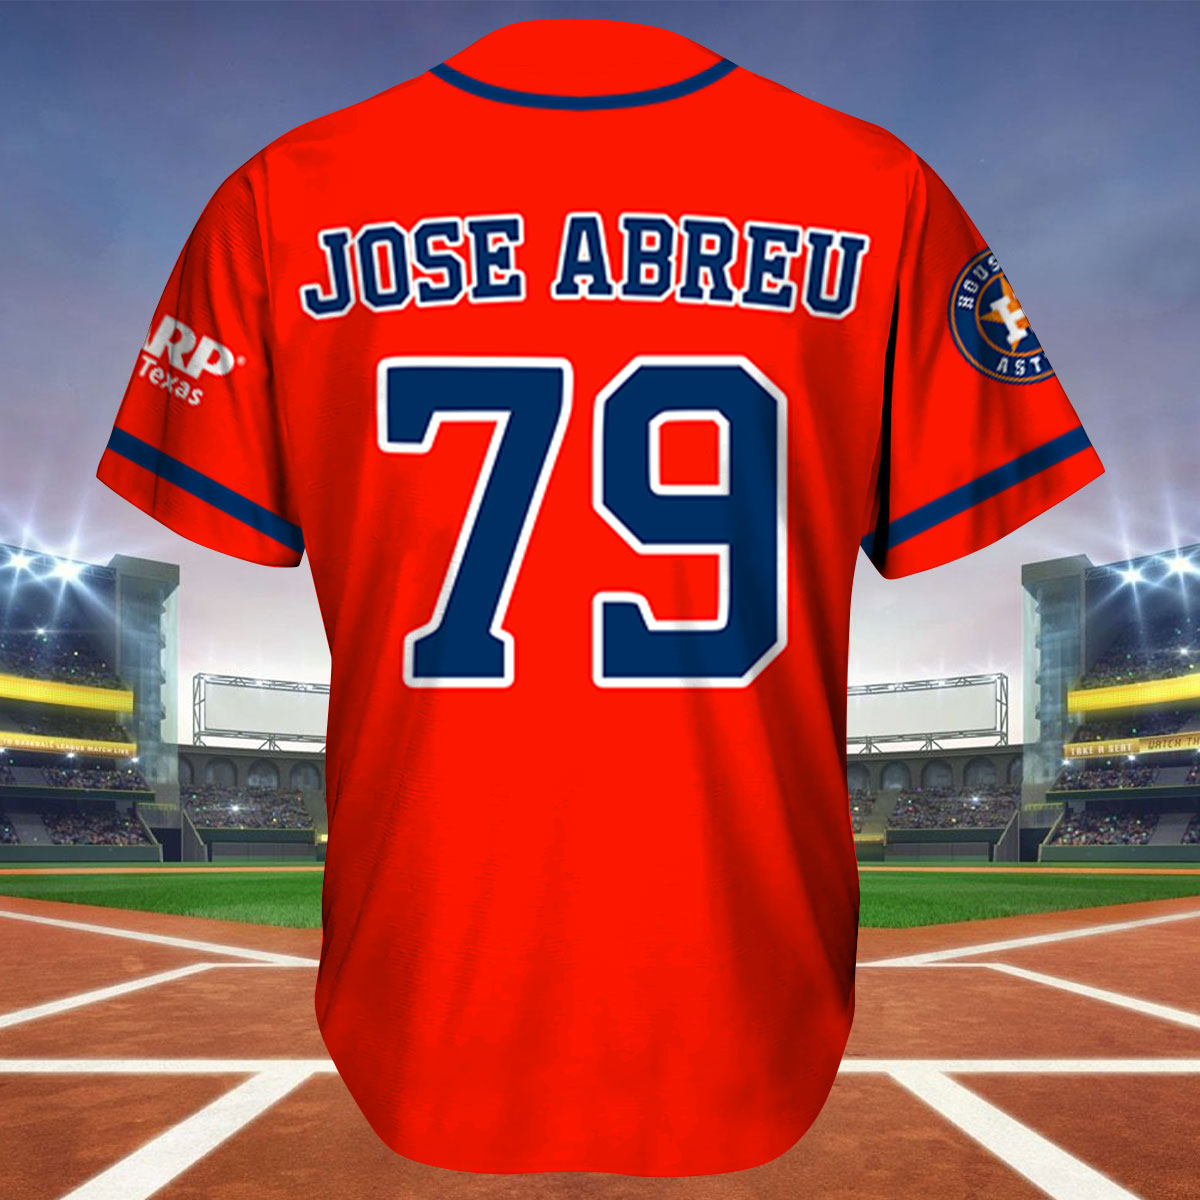 Jose Abreu Los Astros Replica Jersey Promotions 2023 Giveaway - Lelemoon